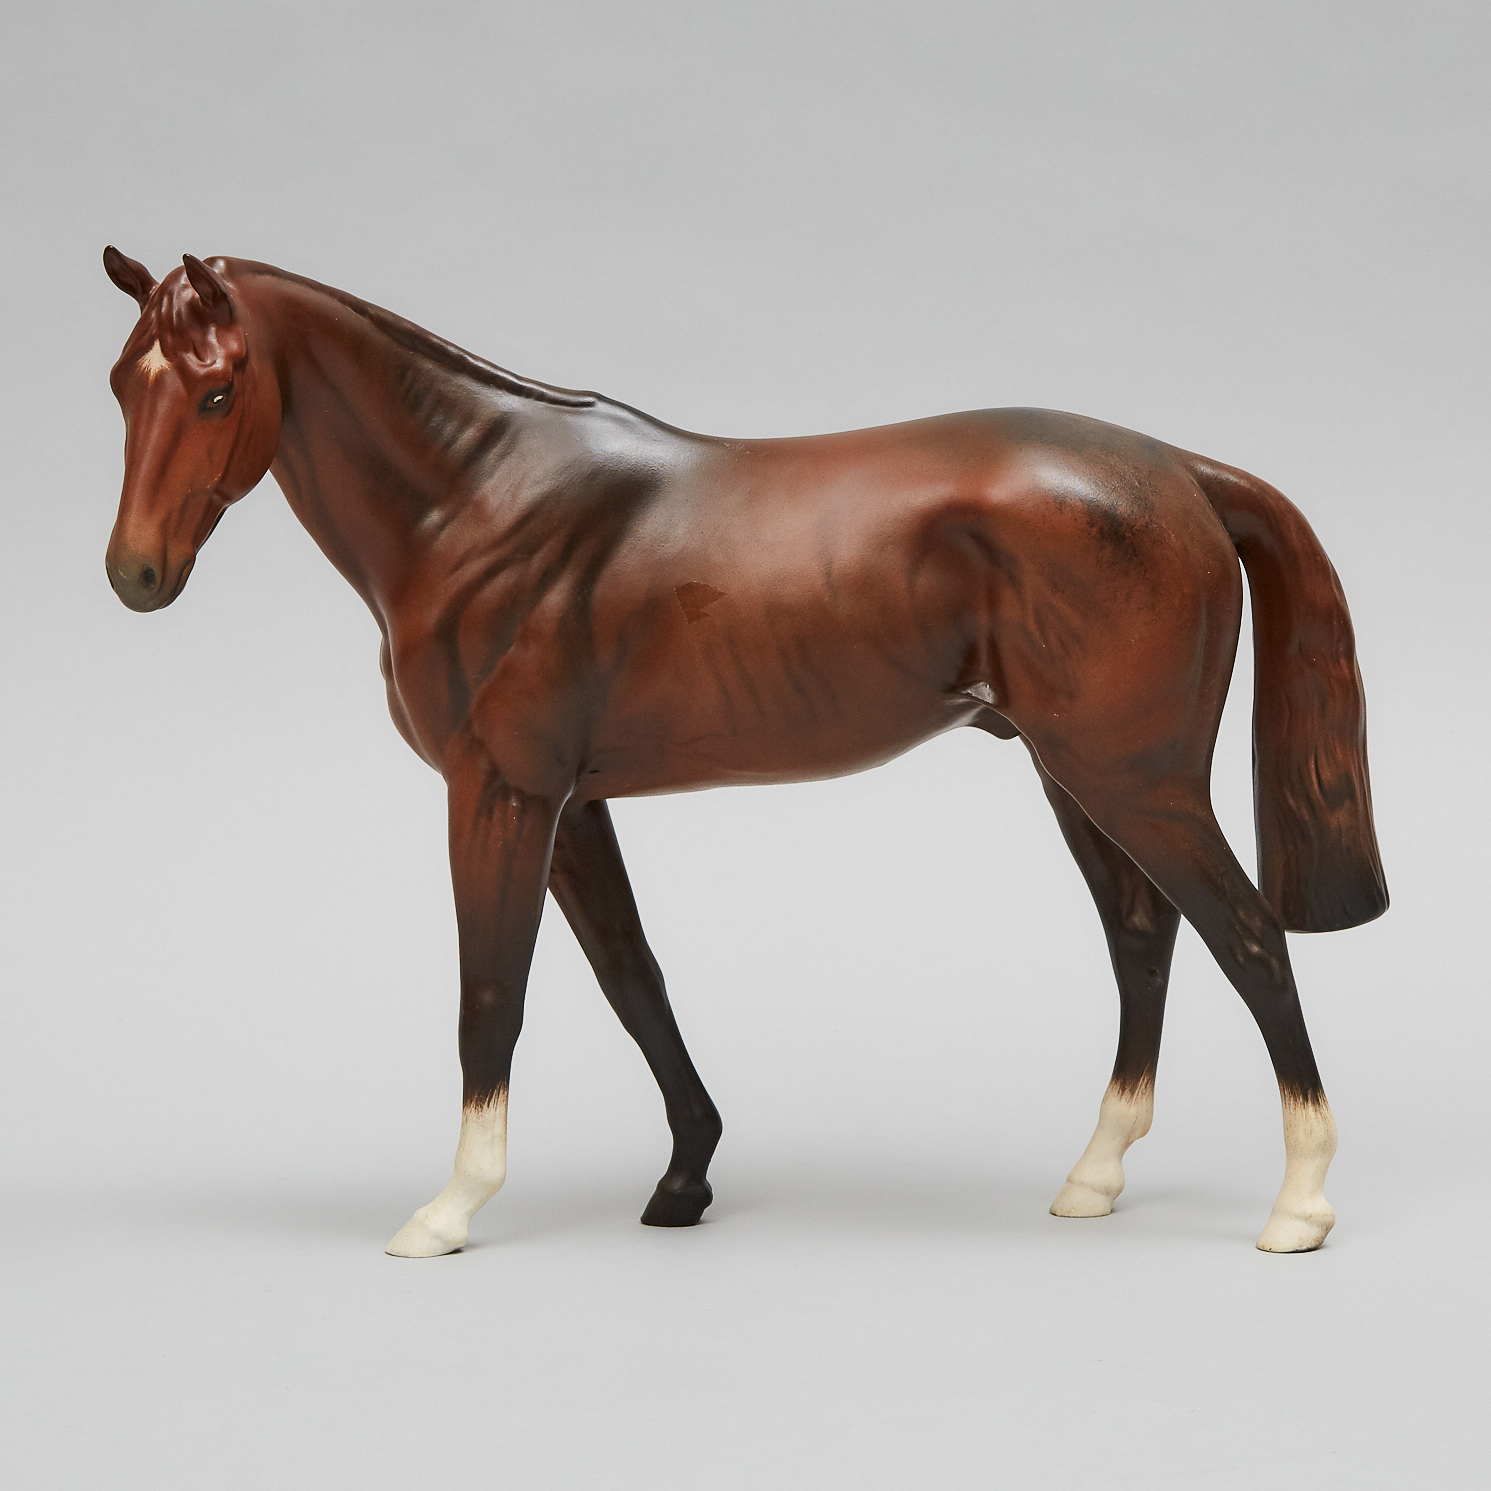 Beswick Model of a Horse, 20th century